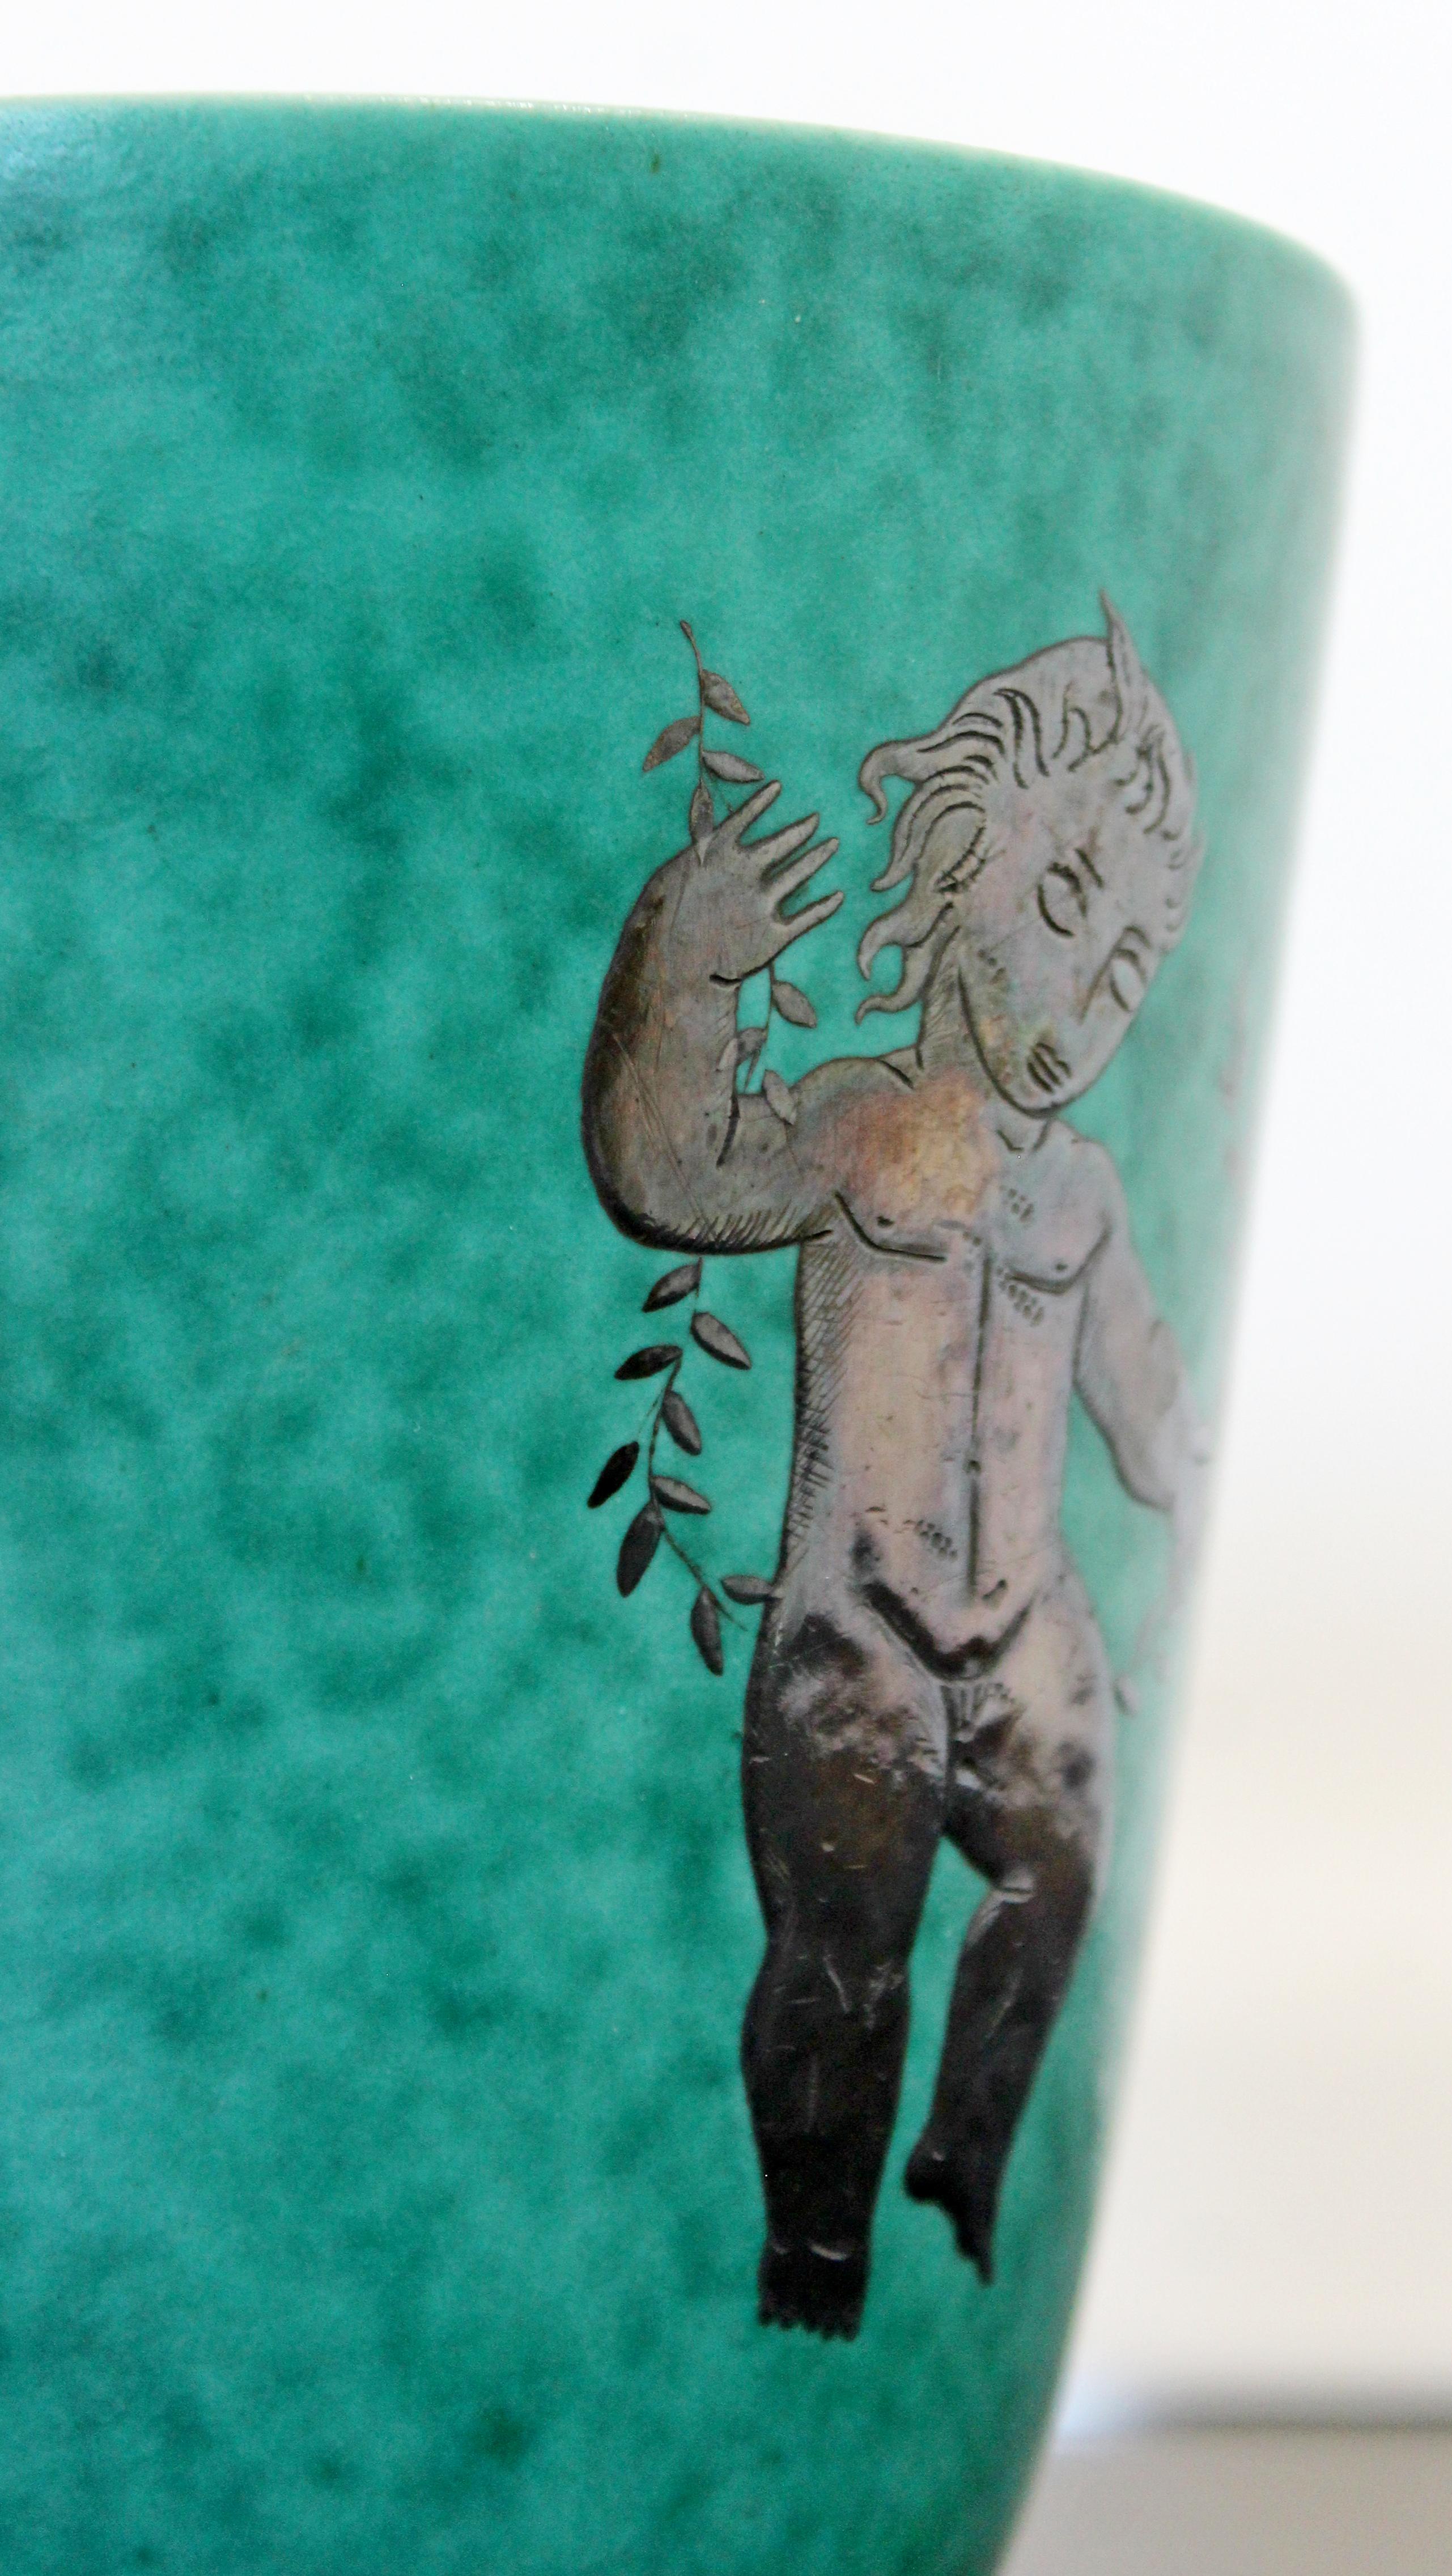 Mid-20th Century Art Deco Wilhelm Kage Gustavsberg Argentina Signed Ceramic Vase Silver Overlay